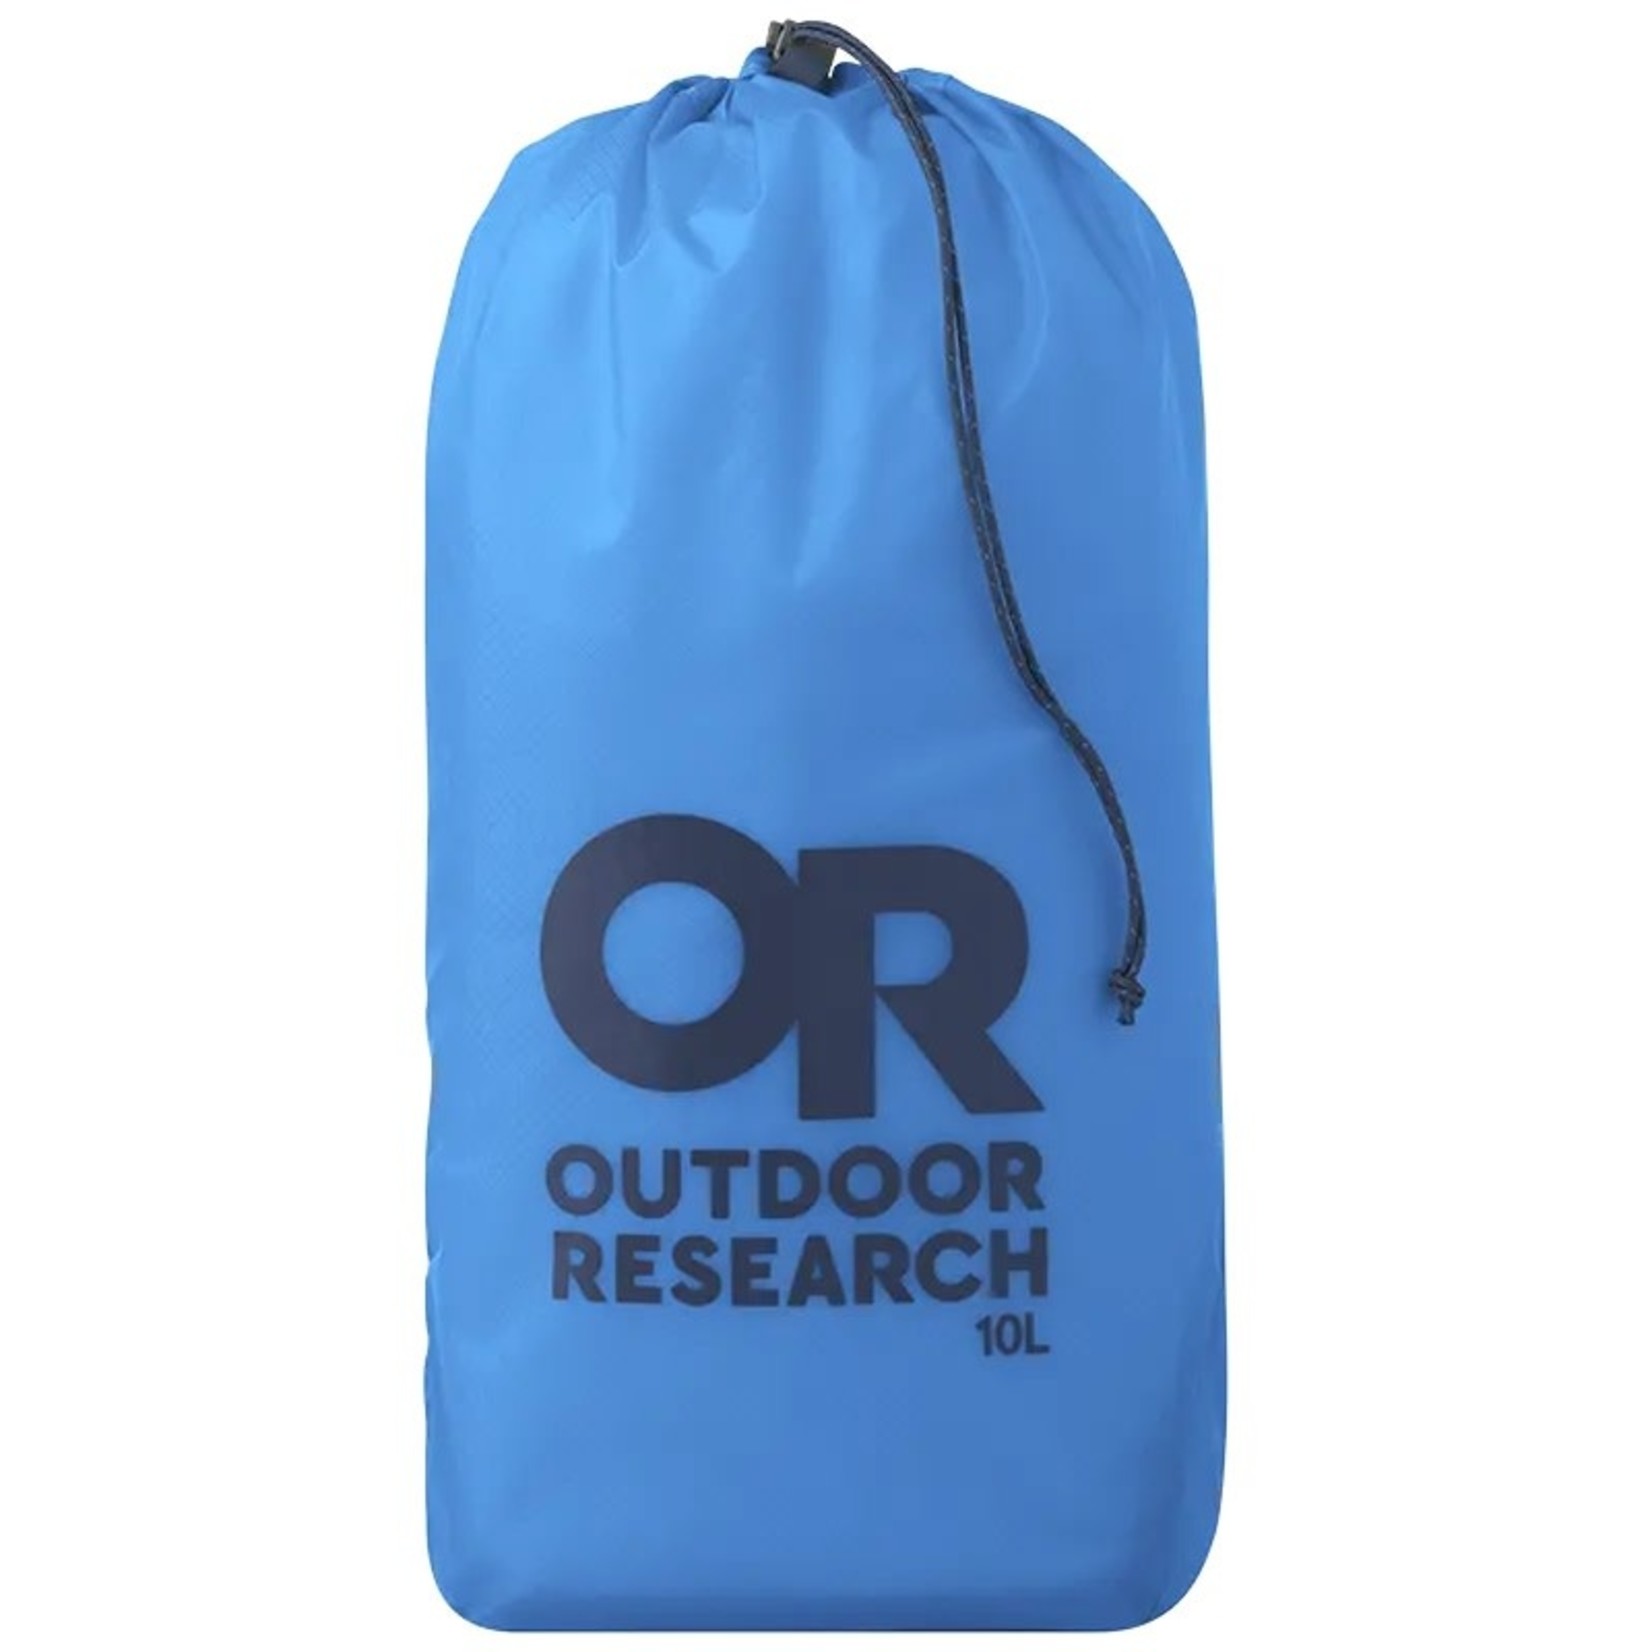 Outdoor Research Sac de rangement Outdoor Research Ultralight - 10L